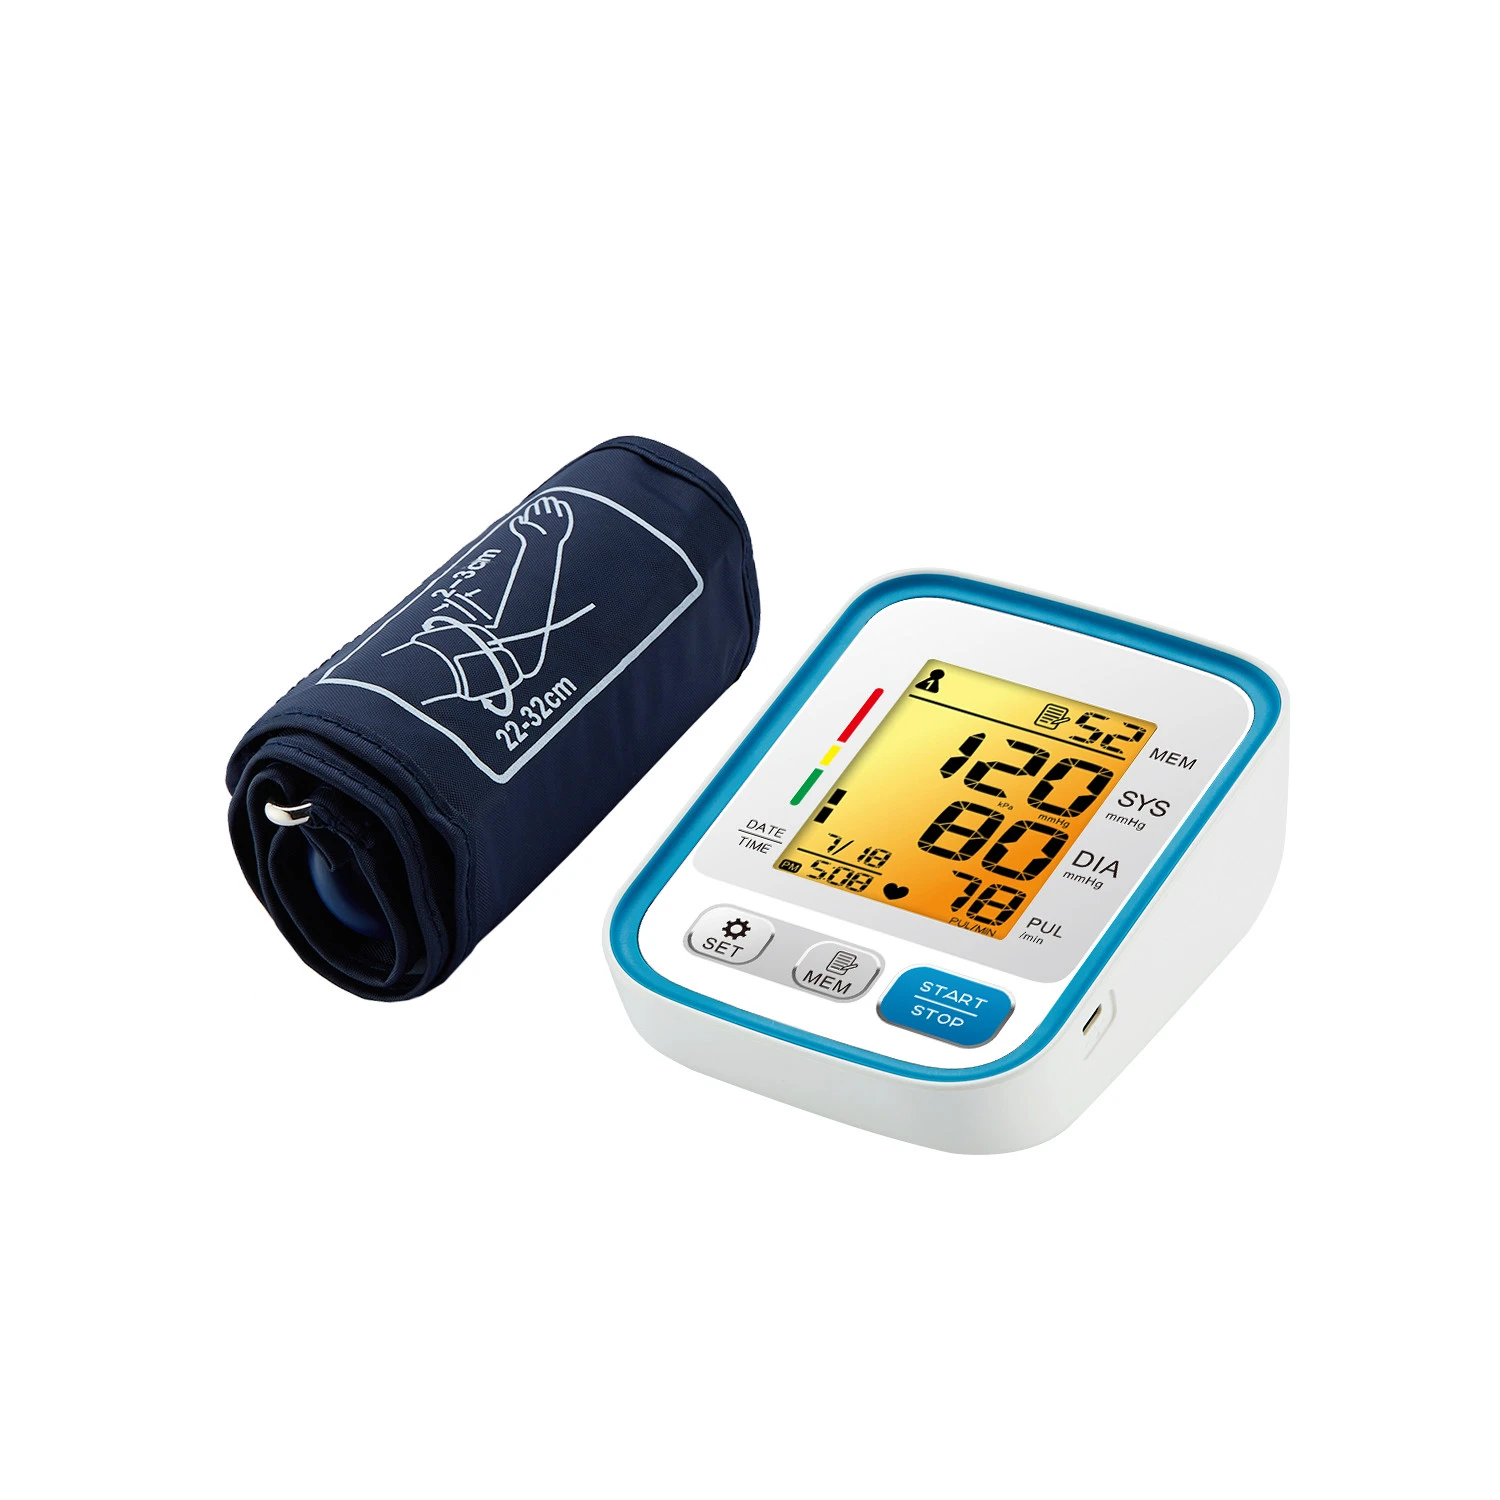 Arm type cheap price digital blood pressure monitor